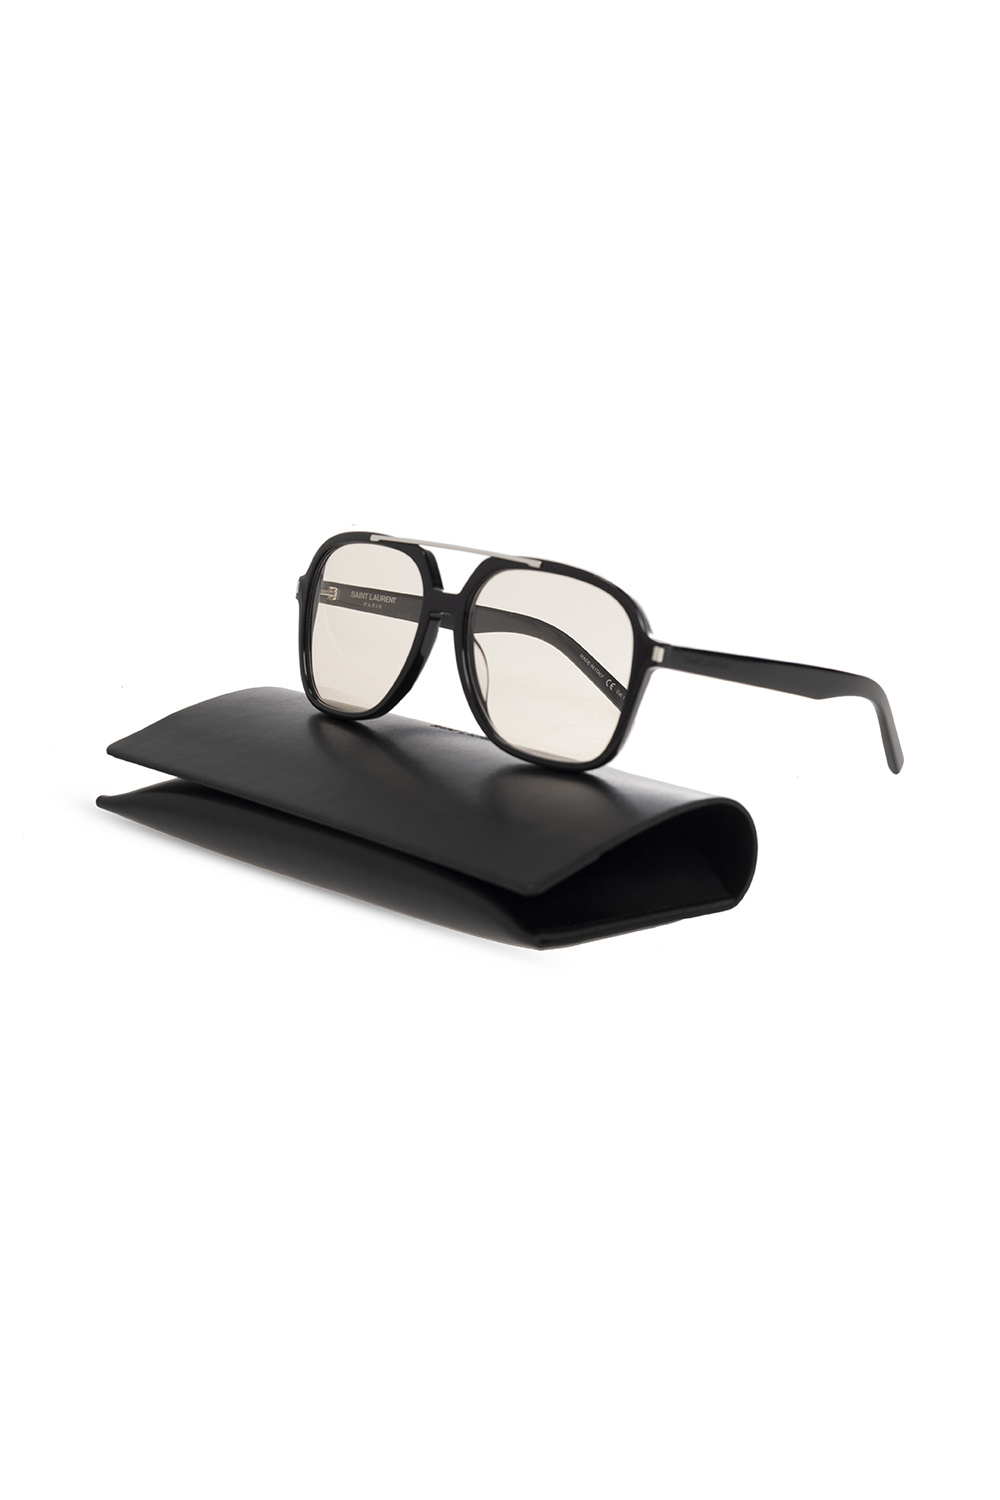 Saint Laurent Sl 545 in Black Womens Accessories Sunglasses 